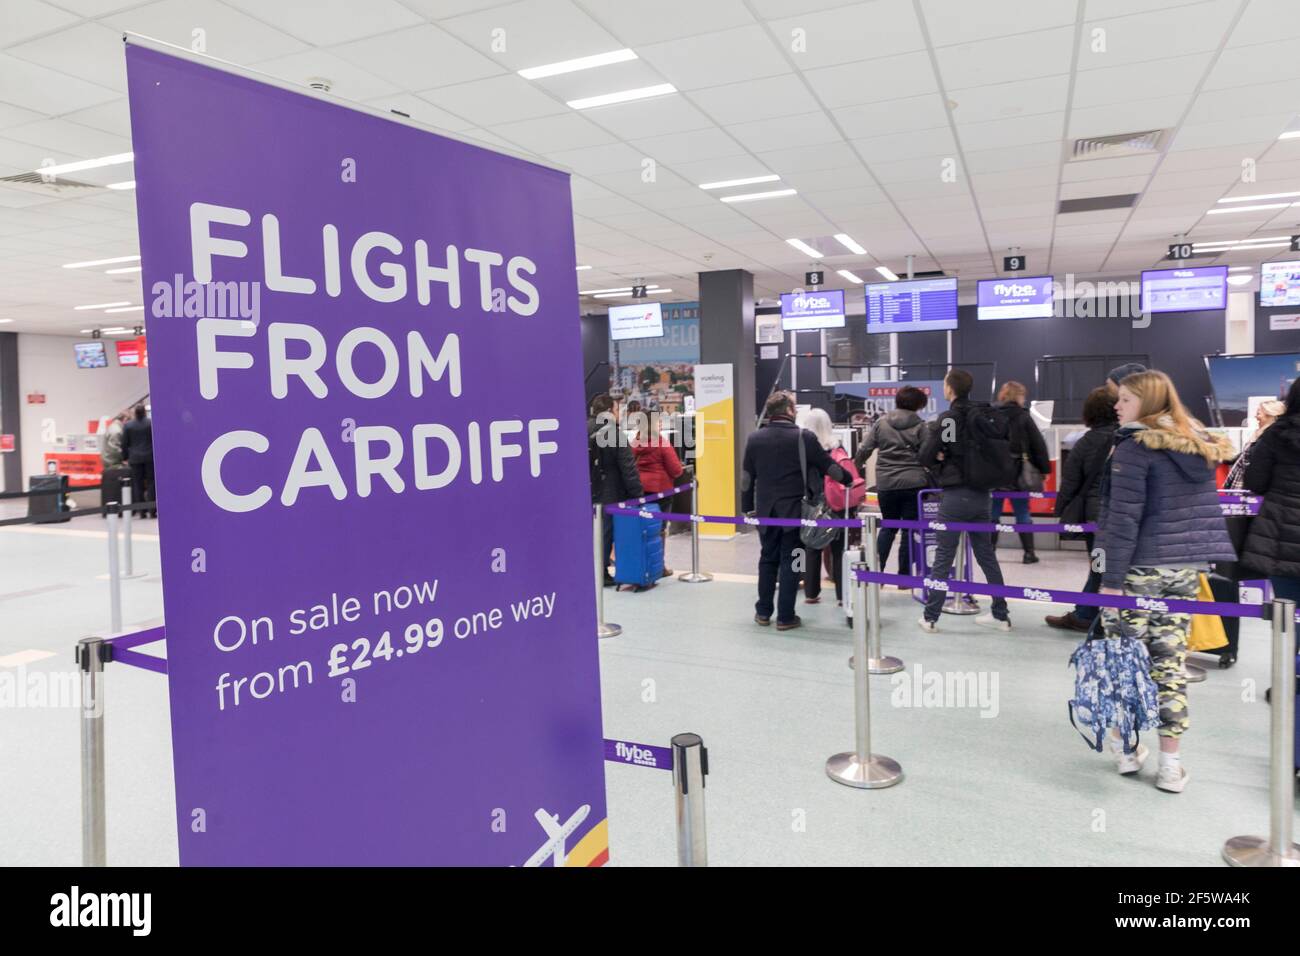 Flight ticket advertising, Cardiff airport, UK Stock Photo